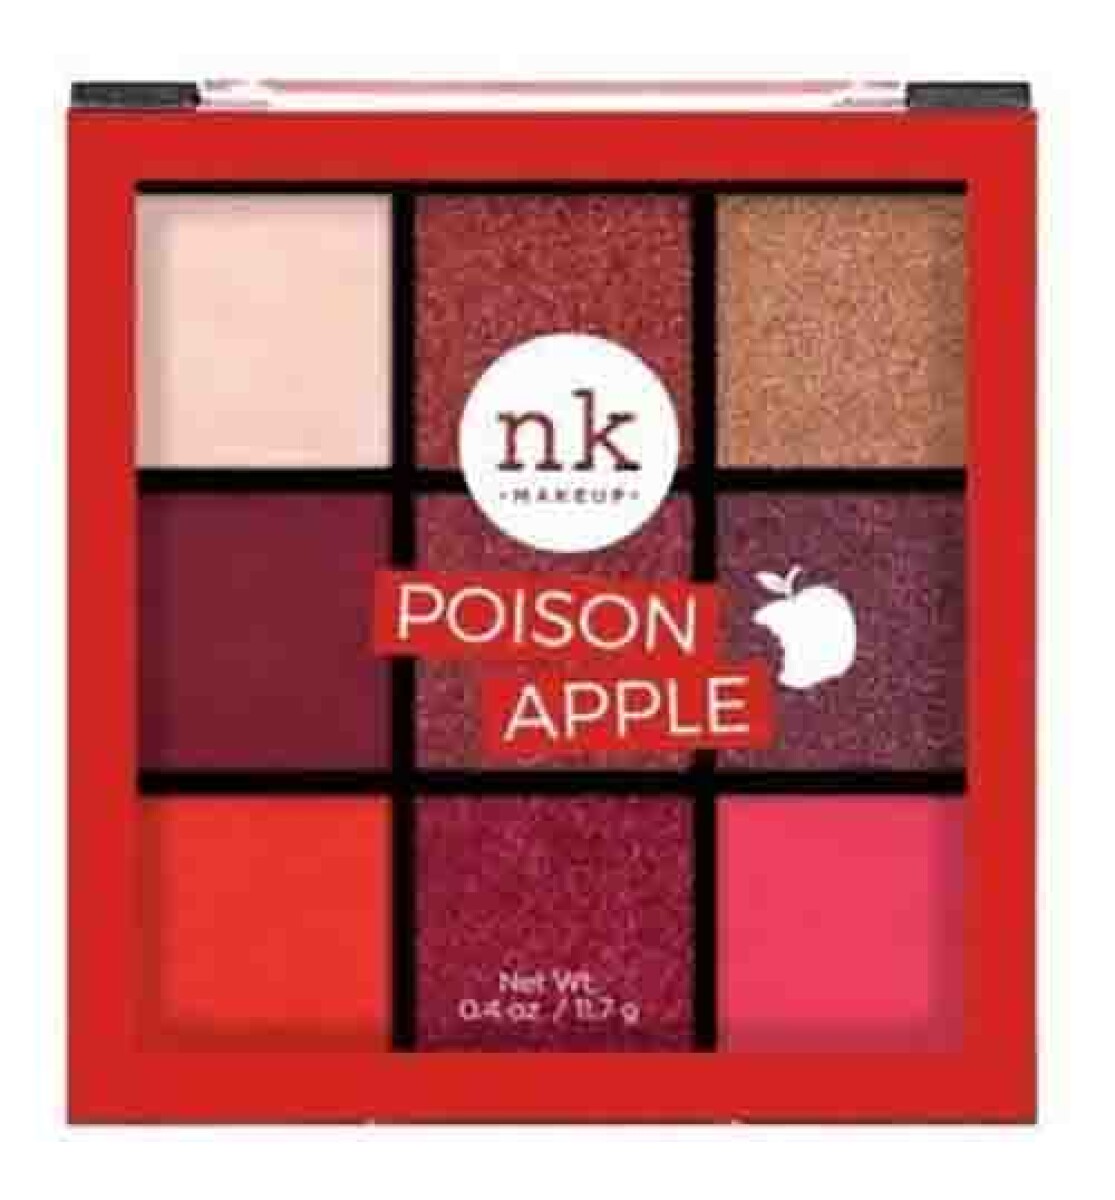 Nicka K petaca de sombras - Poison Apple 